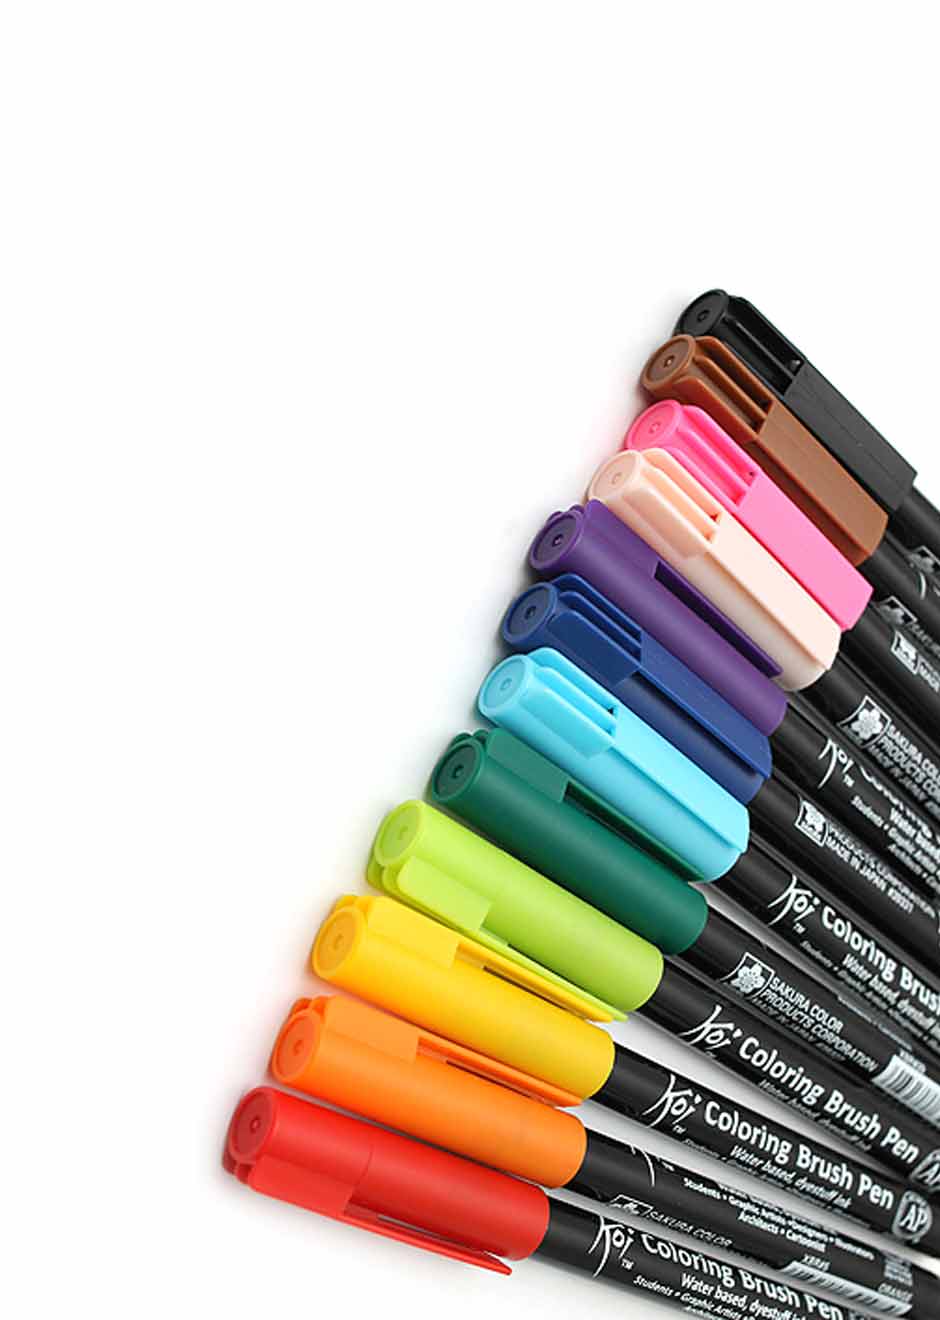 http://tokoprapatan.com/v2/wp-content/uploads/2015/08/koi-brush-pen-mix-color.jpg